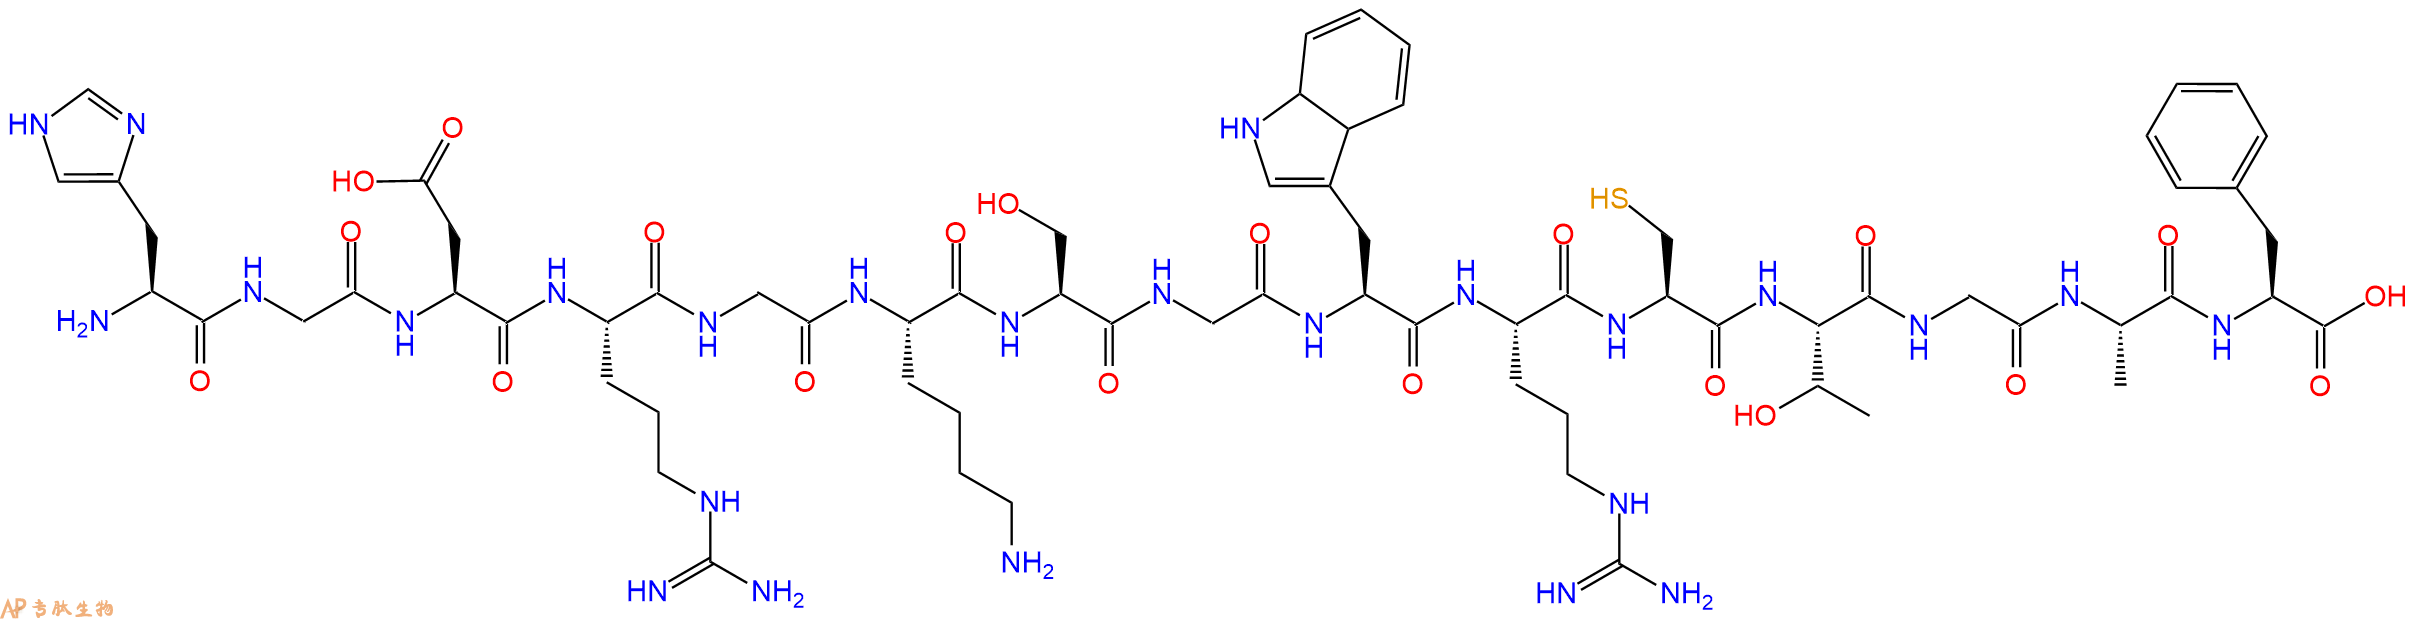 多肽HGDRGKSGWRCTGAF的参数和合成路线|三字母为His-Gly-Asp-Arg-Gly-